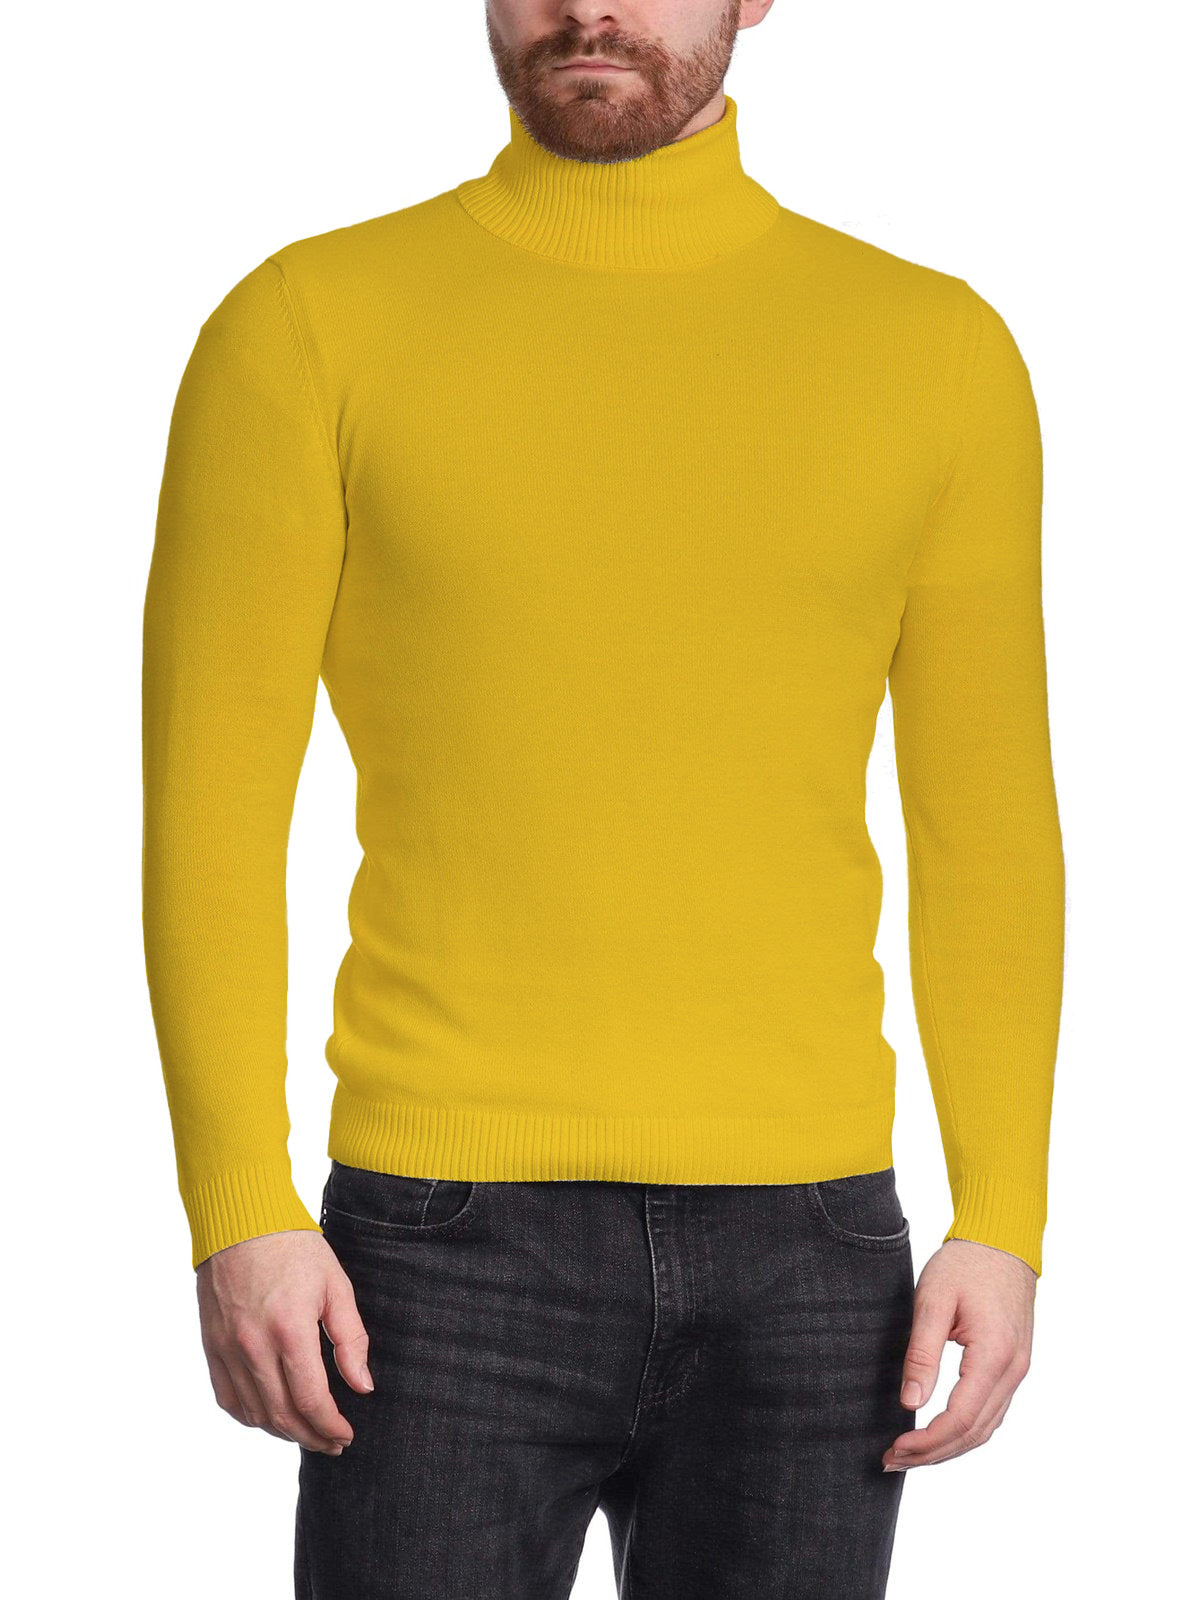 Arthur Black Men's Solid Yellow Pullover Cotton Blend Turtleneck Sweater Shirt